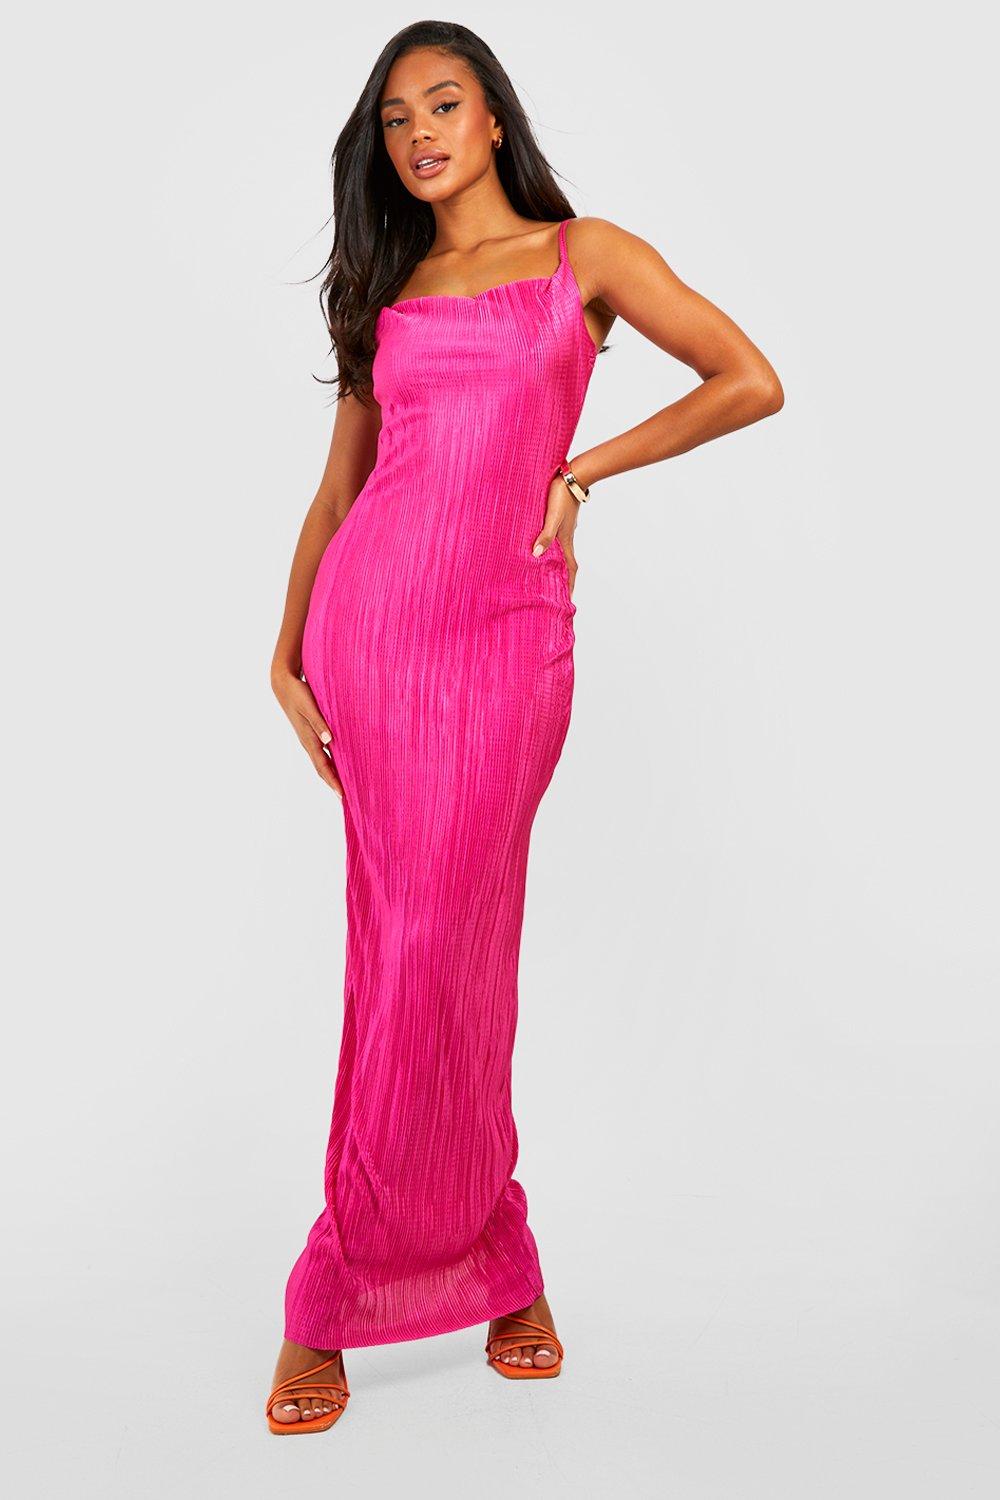 Buy Fuchsia Pink Tie-Up Short Dress Online - Label Ritu Kumar India Store  View